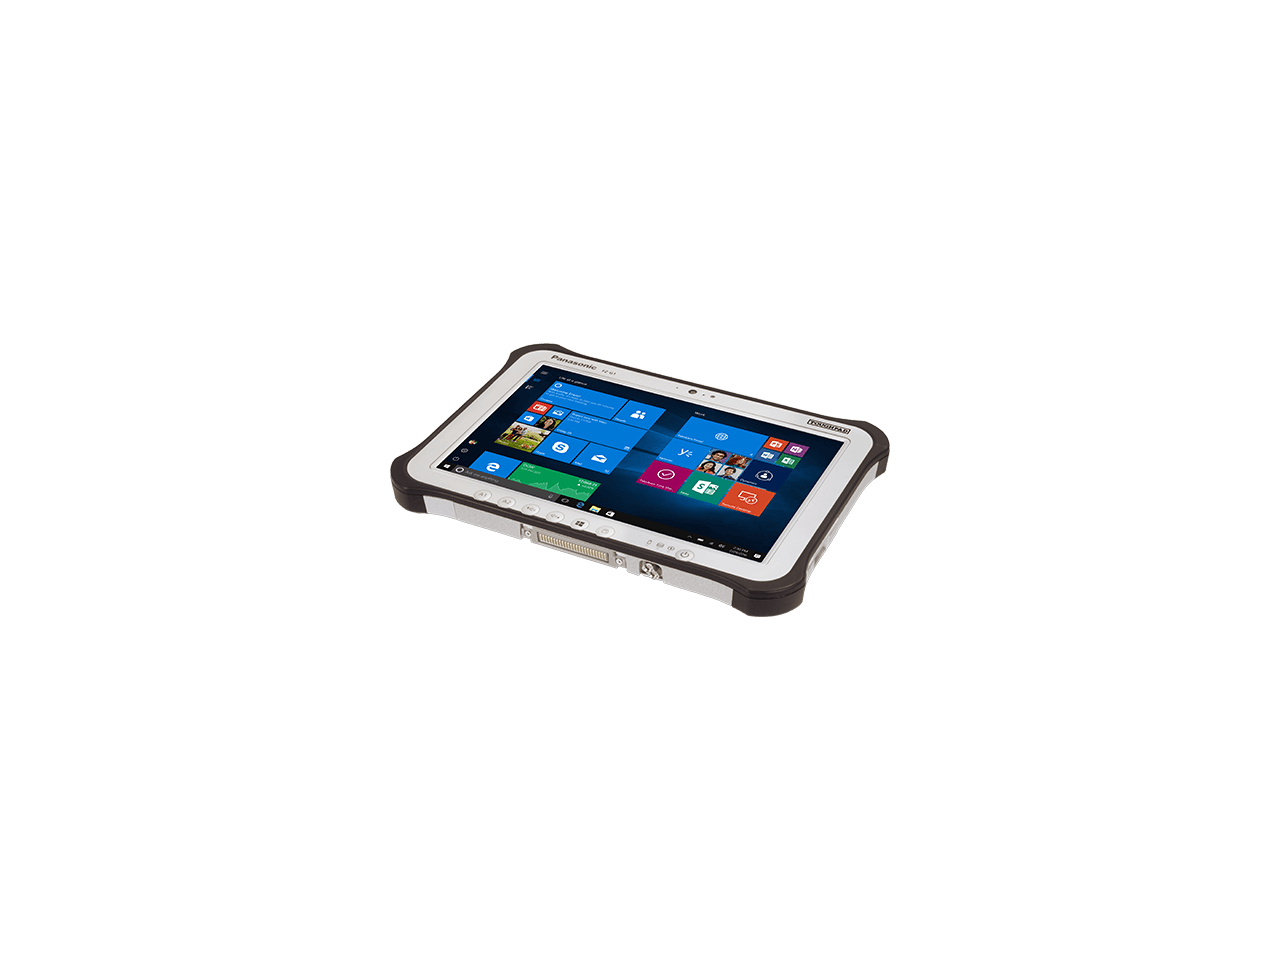 Panasonic Toughpad FZ-G1 MK1, Intel i5-3437U @1.9GHz, 128 SSD, 4GB, Wifi, Bluetooth, GPS, Windows 7 Professional (Renewed)